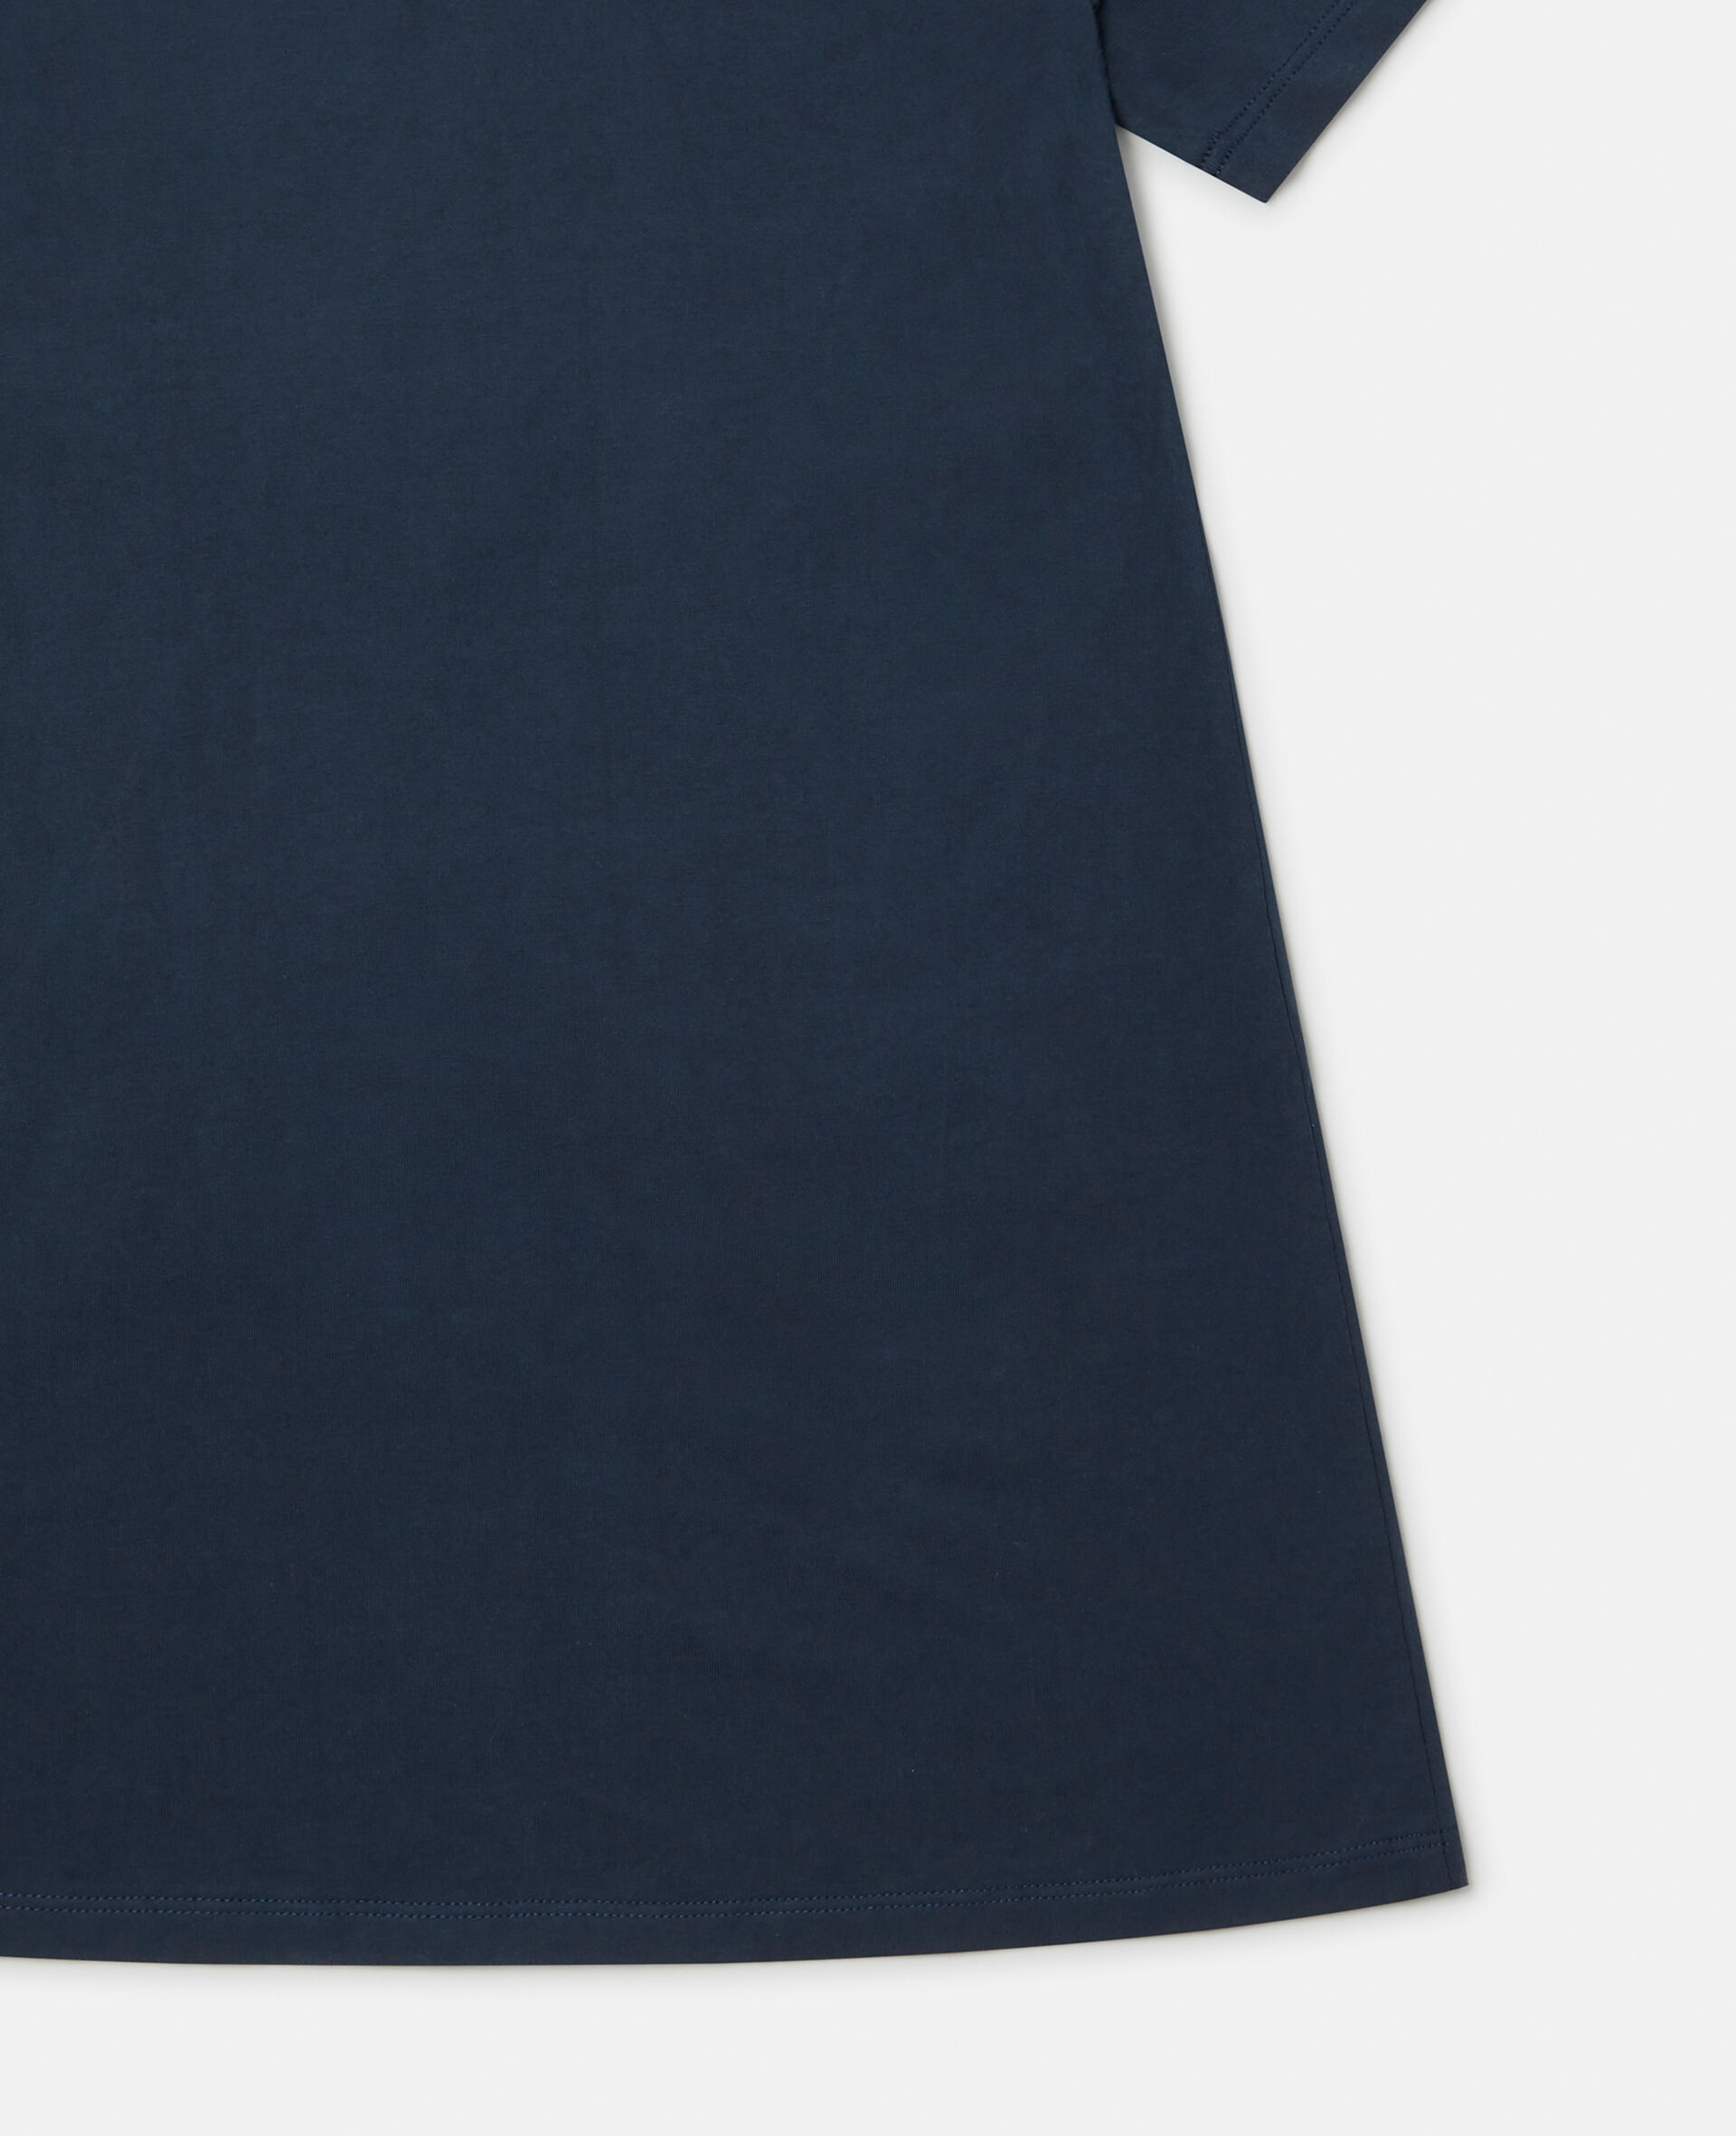 Fringed Star Sweatshirt Dress-Blue-large image number 3